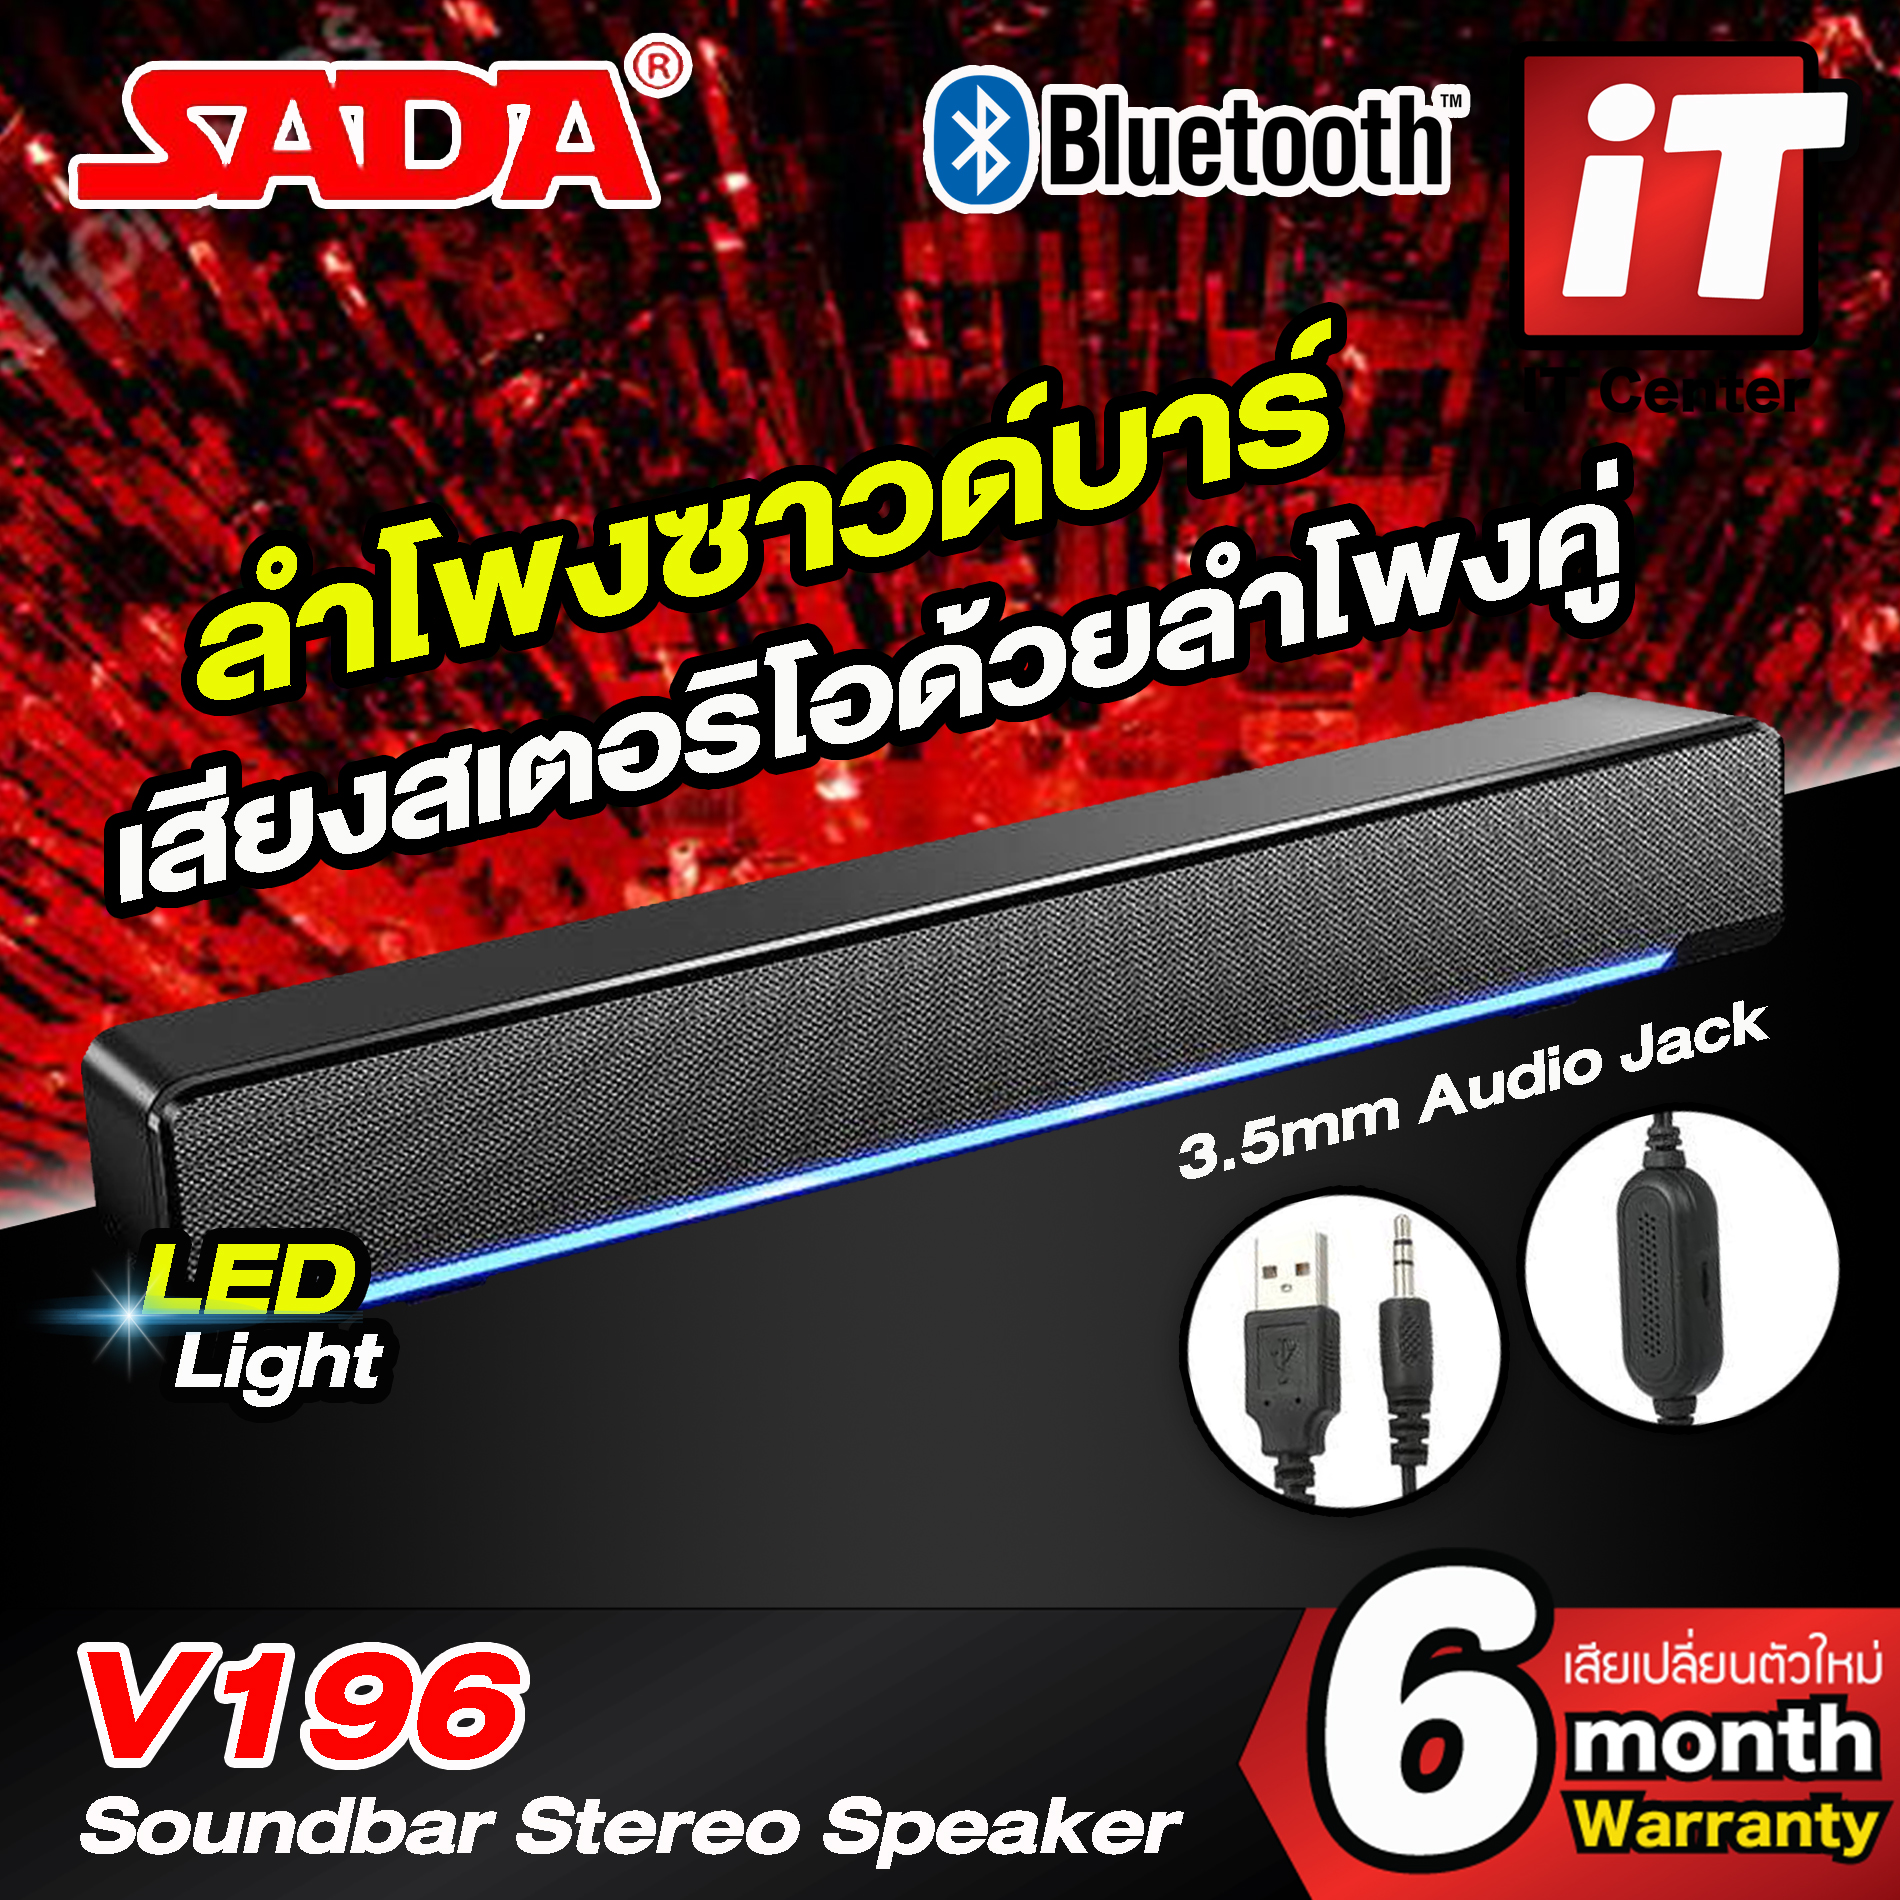 SADA-V196 Soundbar Stereo Speaker ลำโพง ซาวด์บาร์ ระบบเสียงสเตอริโอด้วยลำโพงคู่ พร้อมไฟ LED การเชื่อมต่อด้วย Jack 3.5 mm